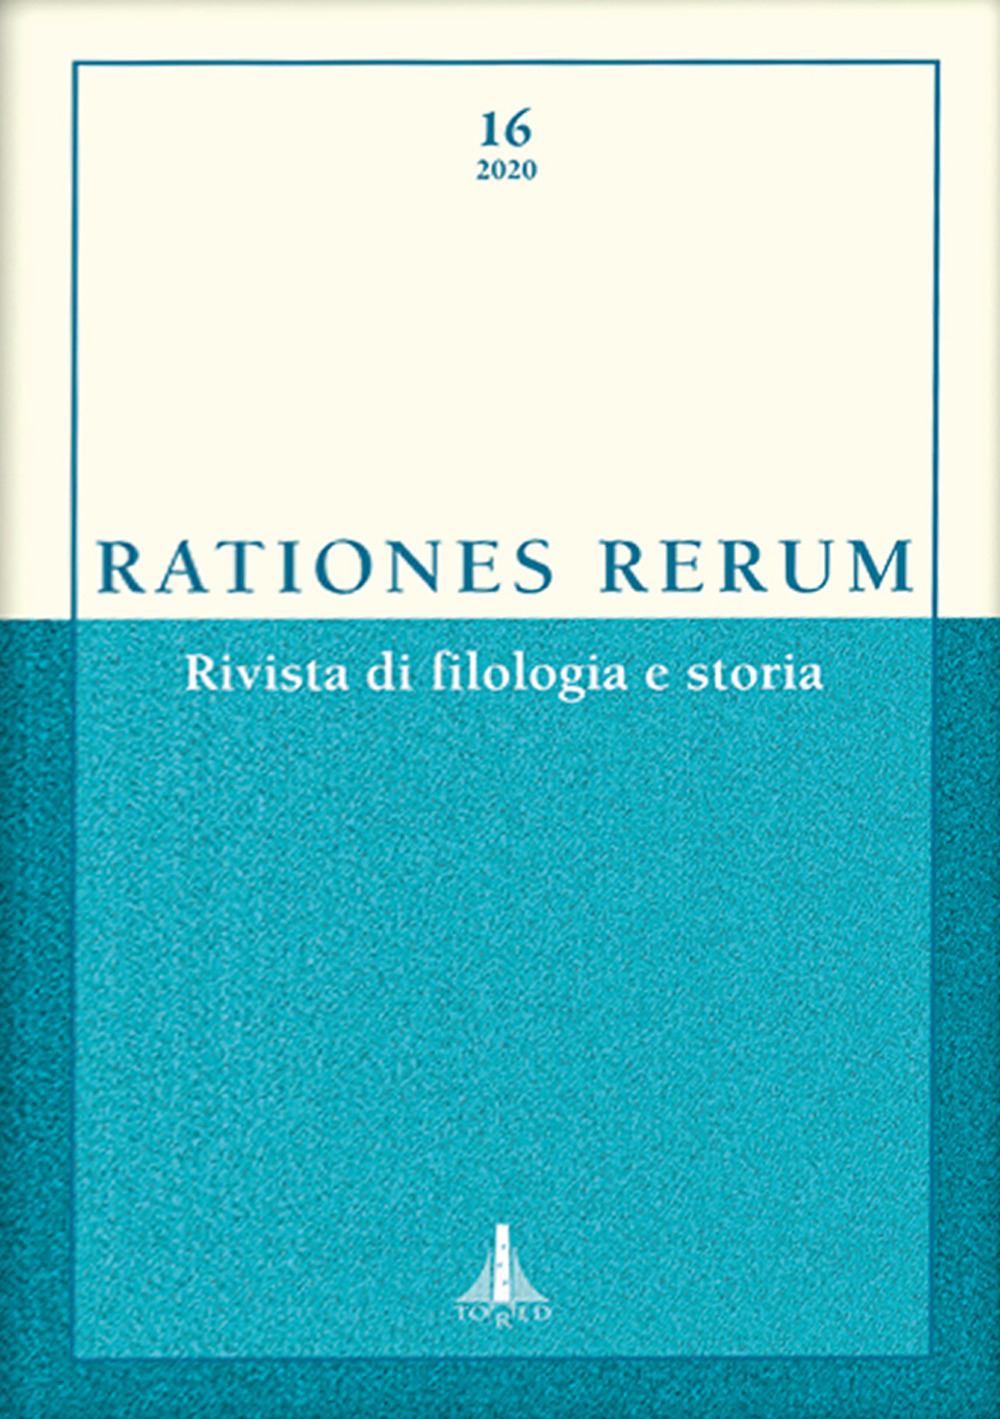 Rationes rerum. Rivista di filologia e storia. Ediz. multilingue. Vol. 16